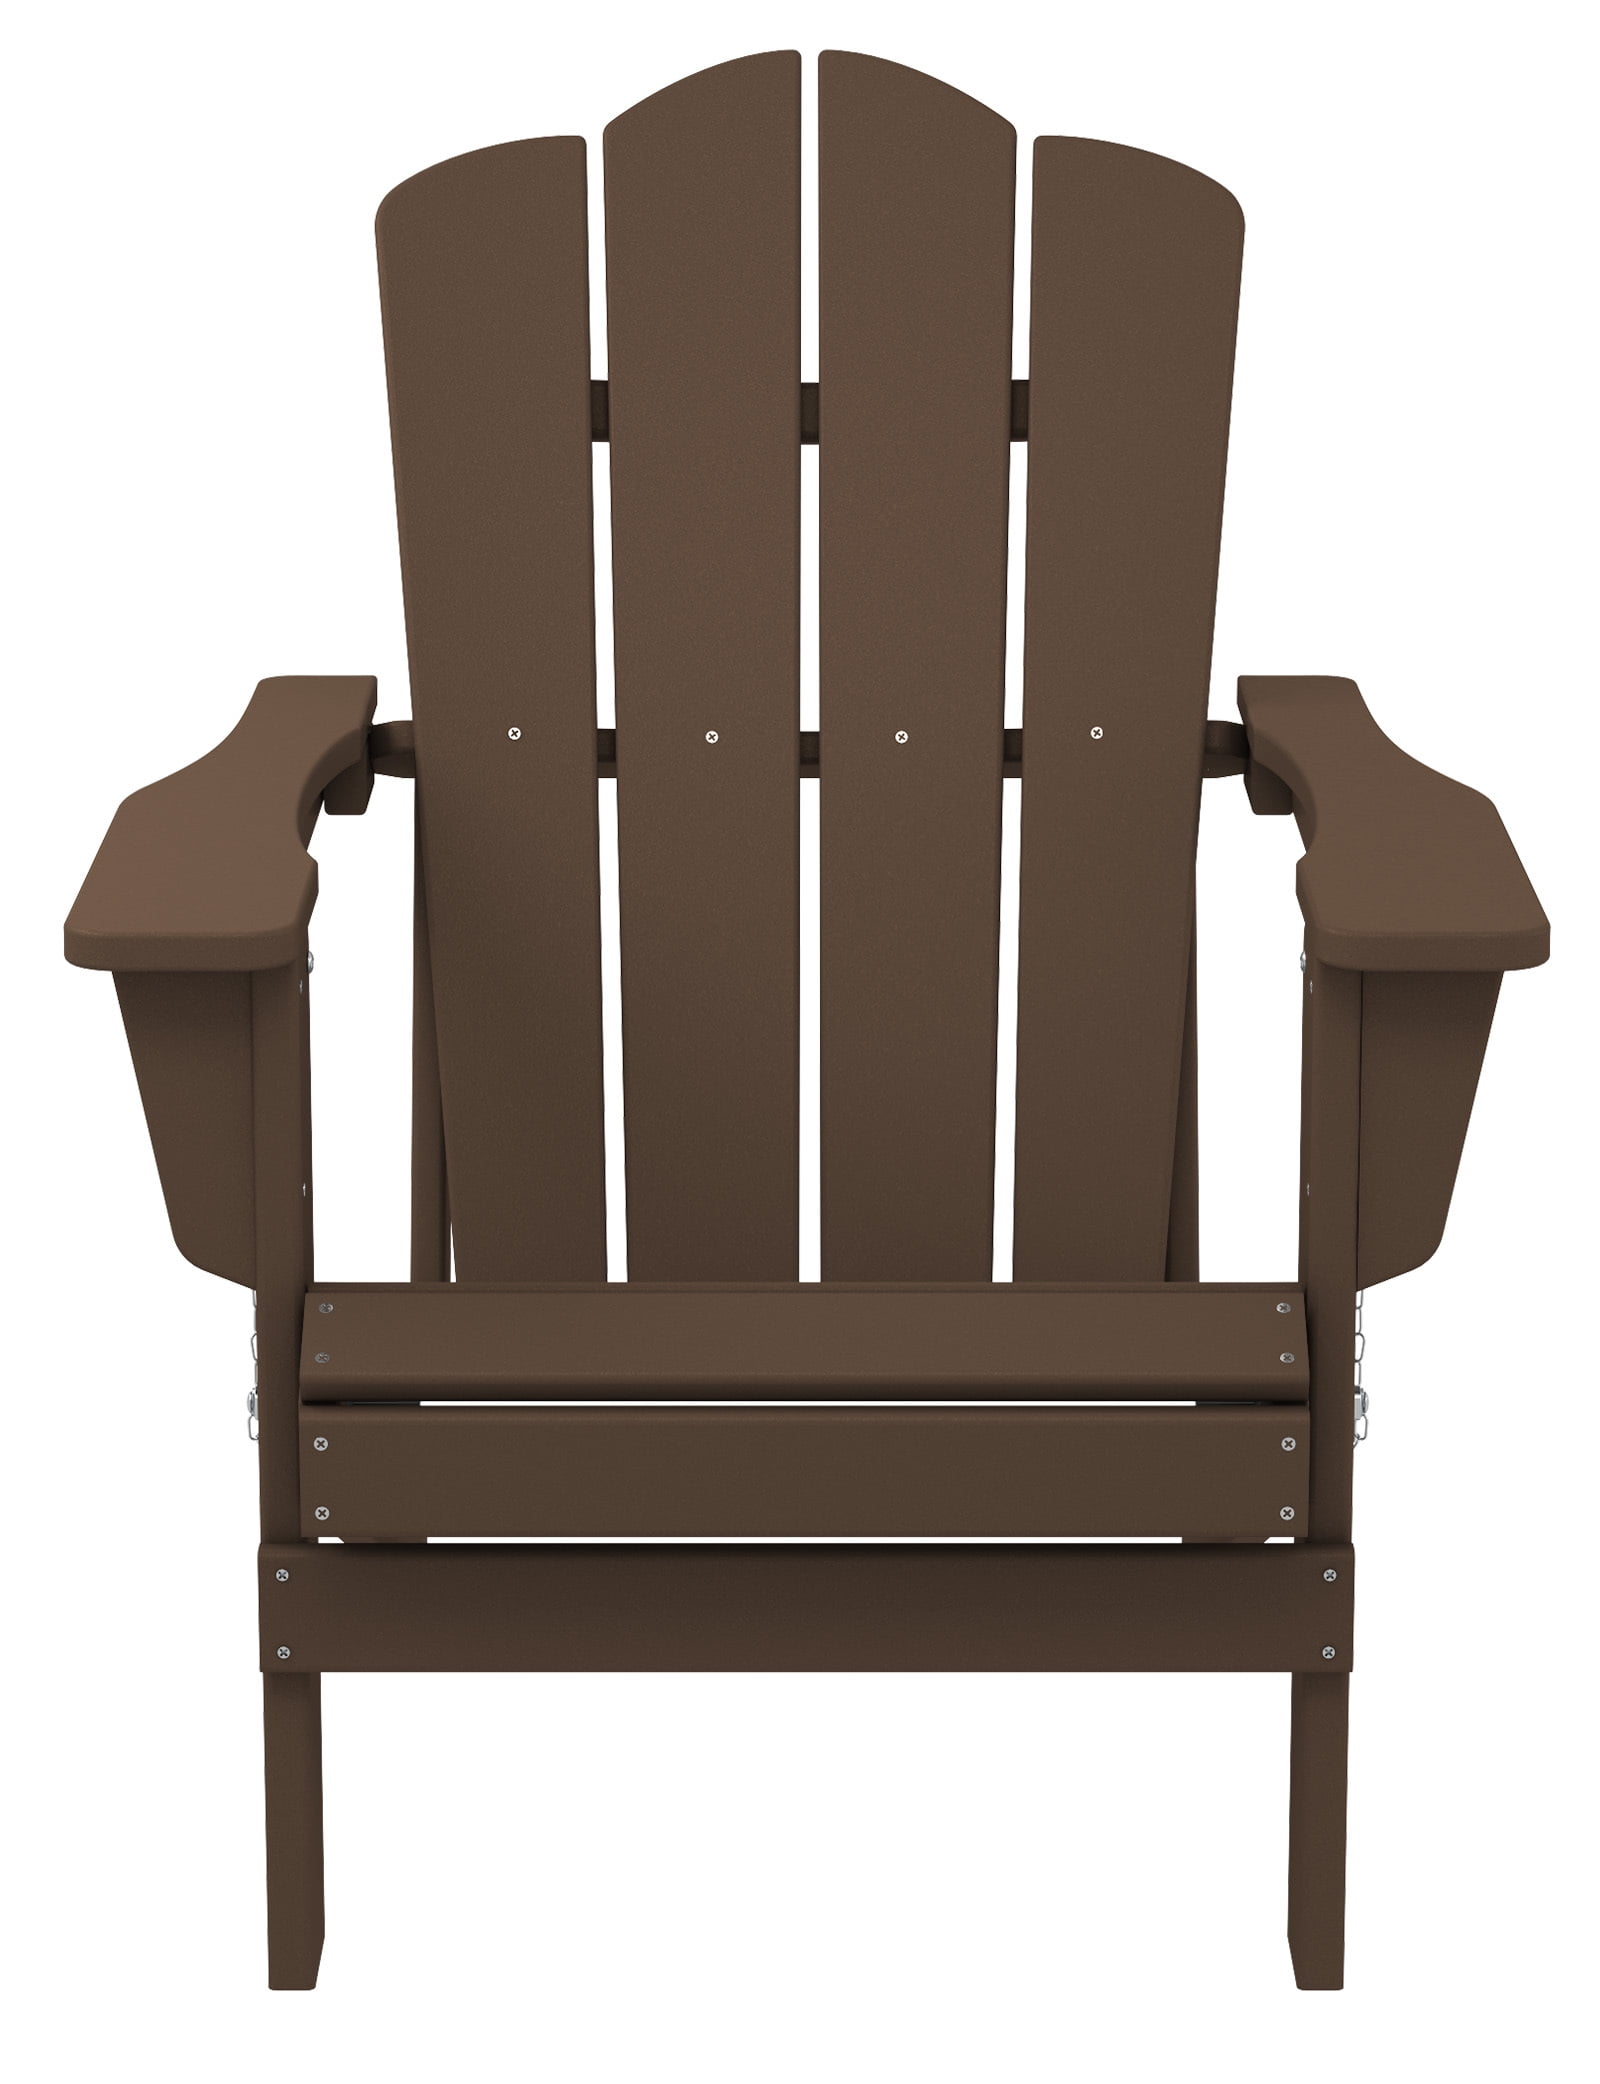 Plastic Adirondack Chair, Folding Outdoor Patio Furniture Chair, Gray